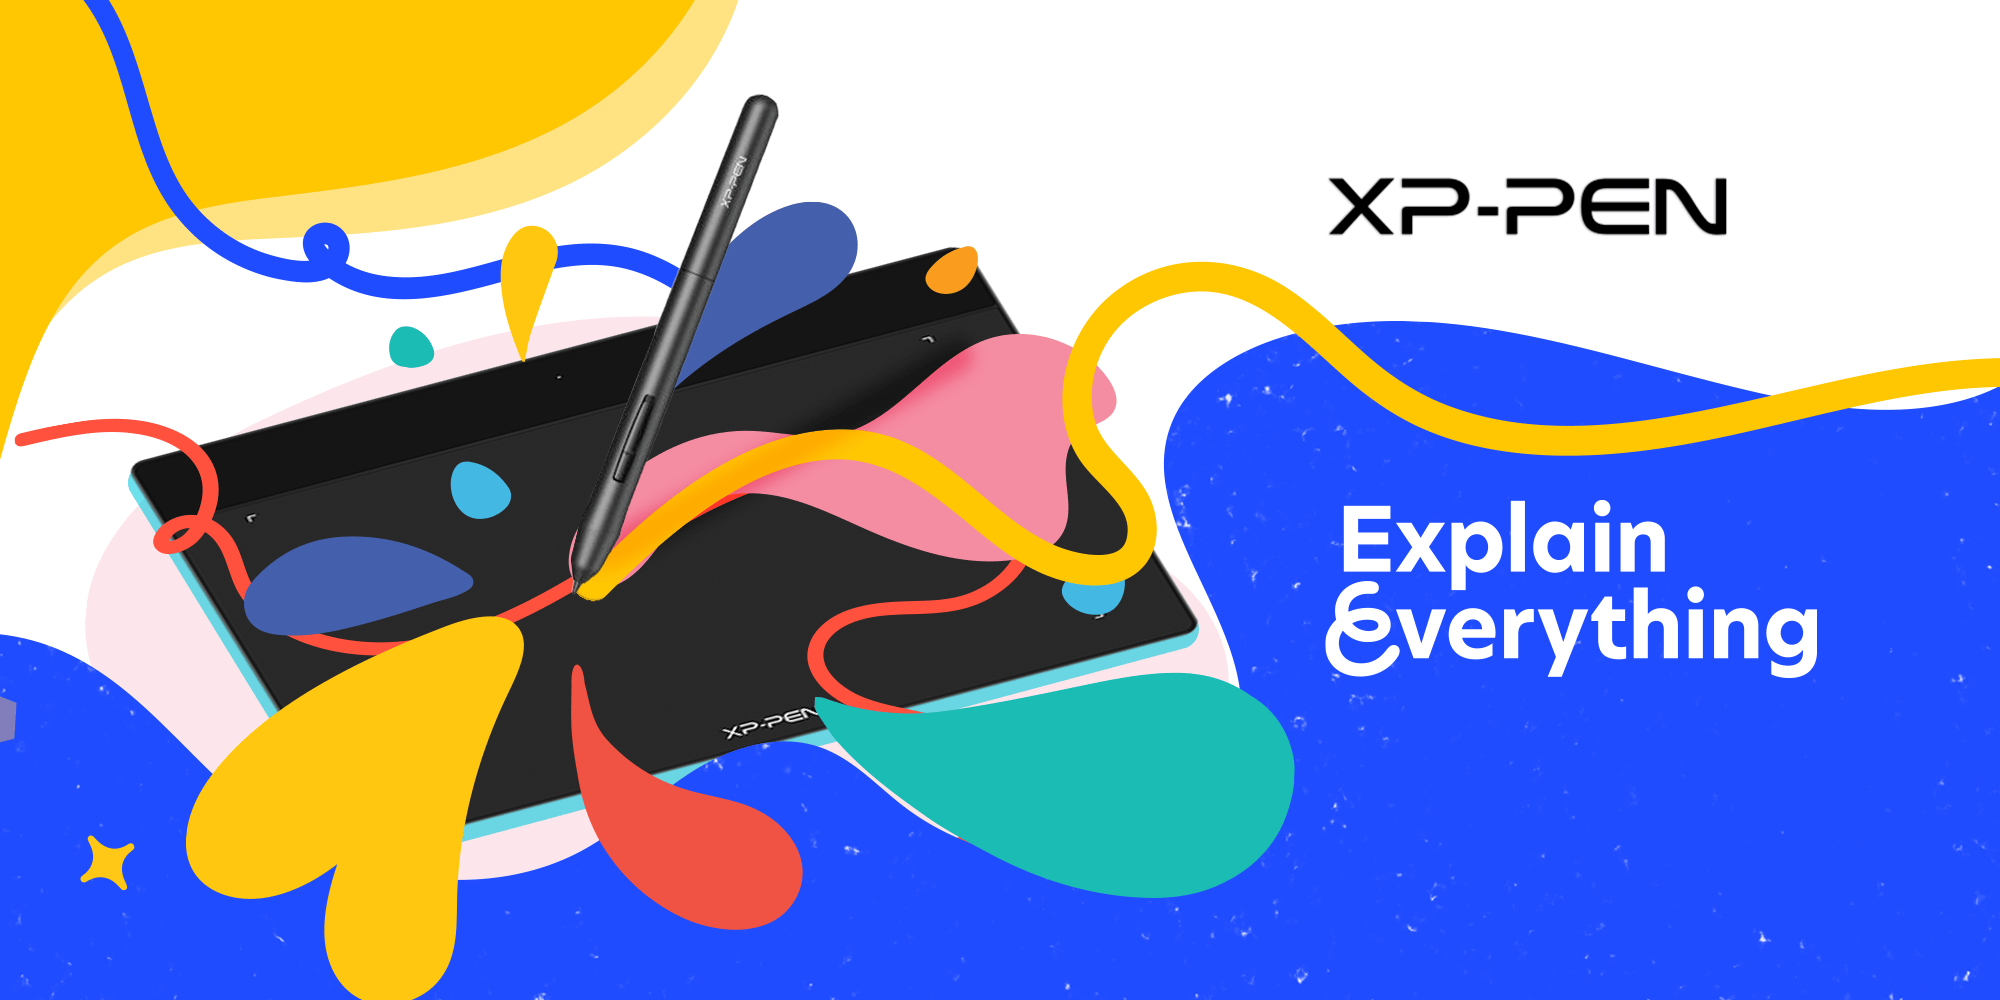 xp-pen Explain Everything pen tablet